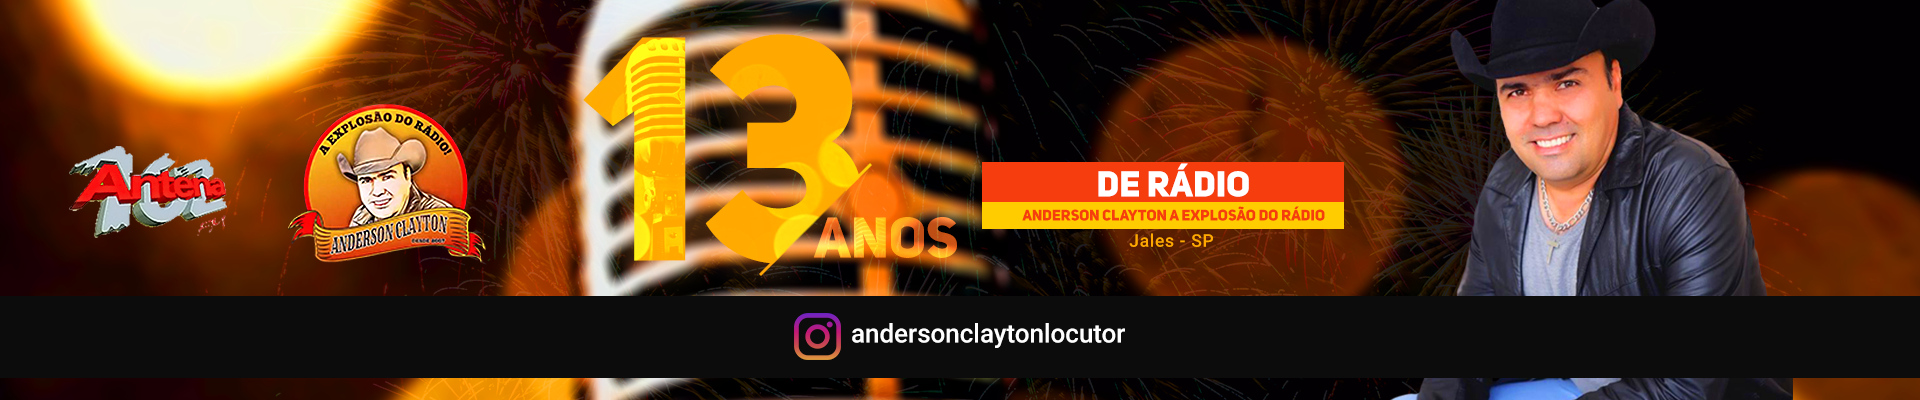 Anderson Clayton a Explosão do Rádio - Locutor Antena 102